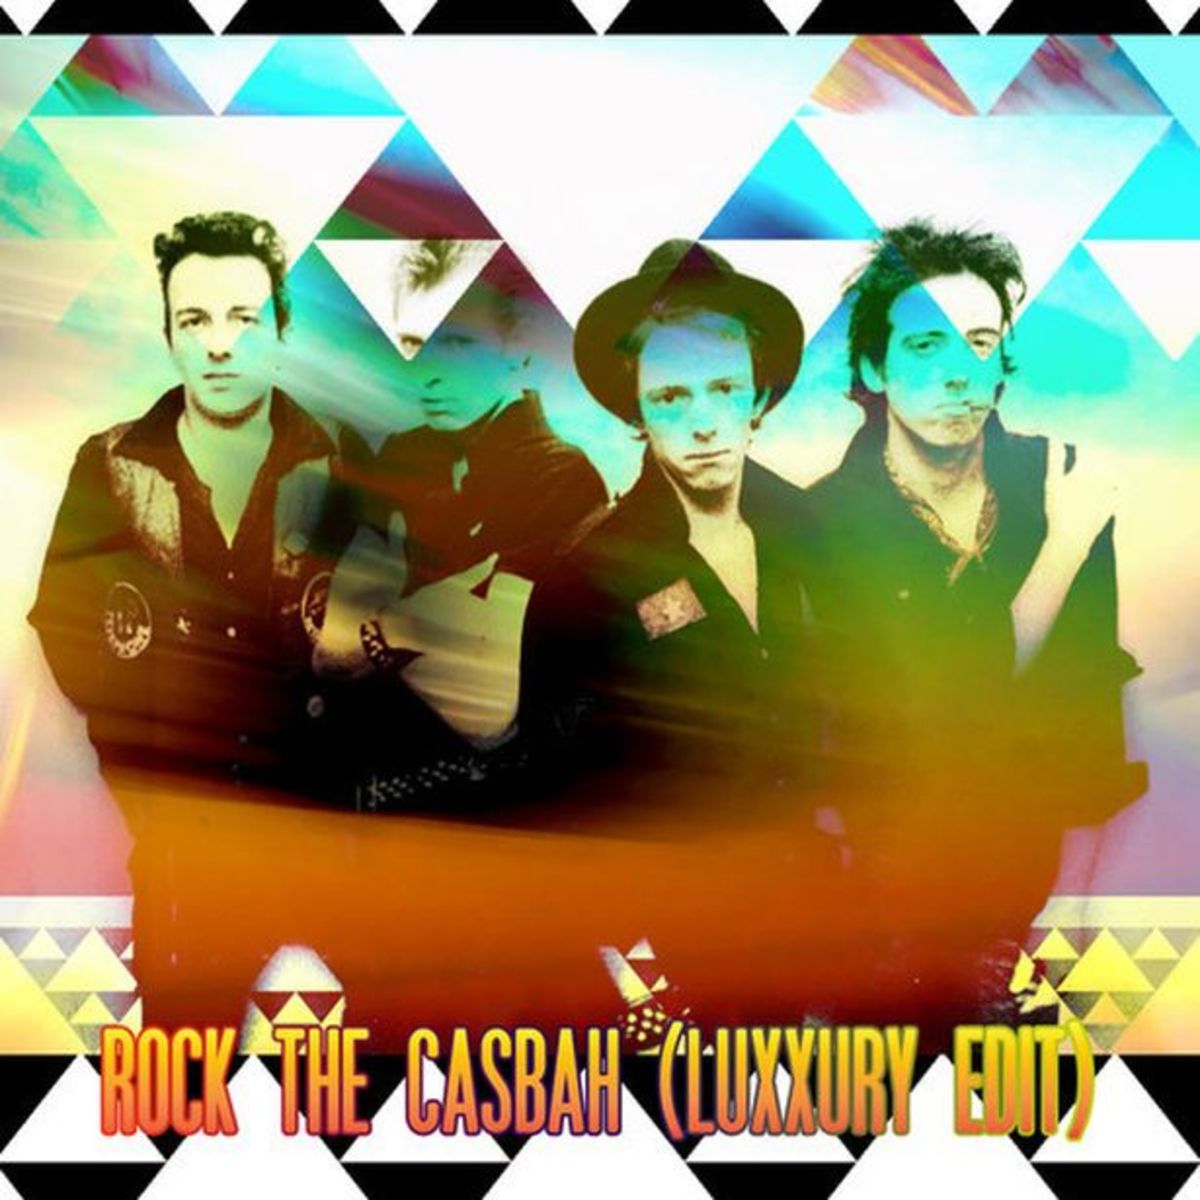 The Clash "Rock The Casbah" (Luxxury Edit) - EDM Download